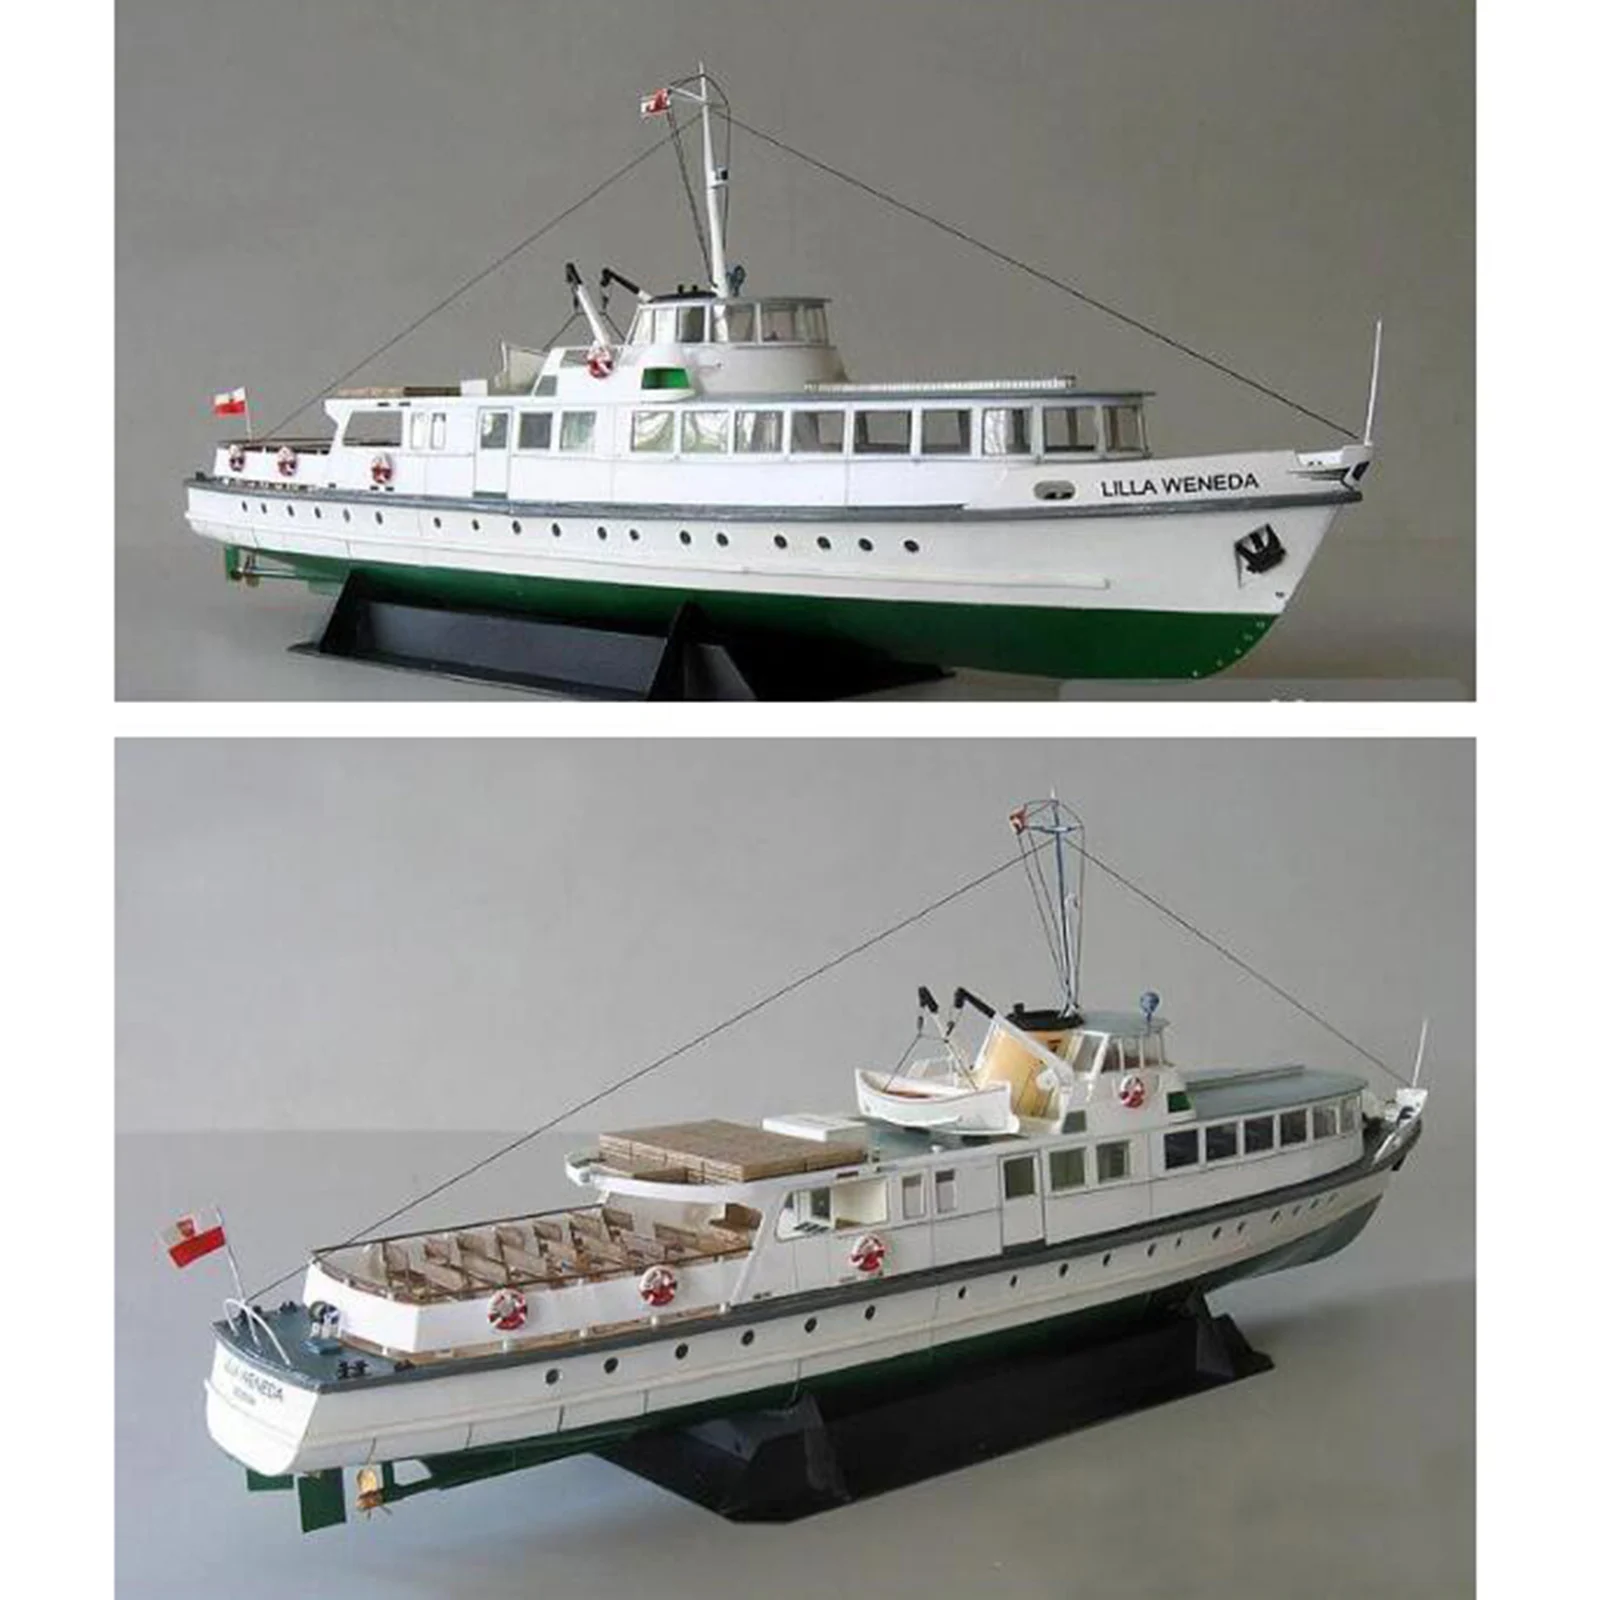 1/100 Lilla Weneda Coastal Ferry Boat Model Kit Game Office Decor Gifts